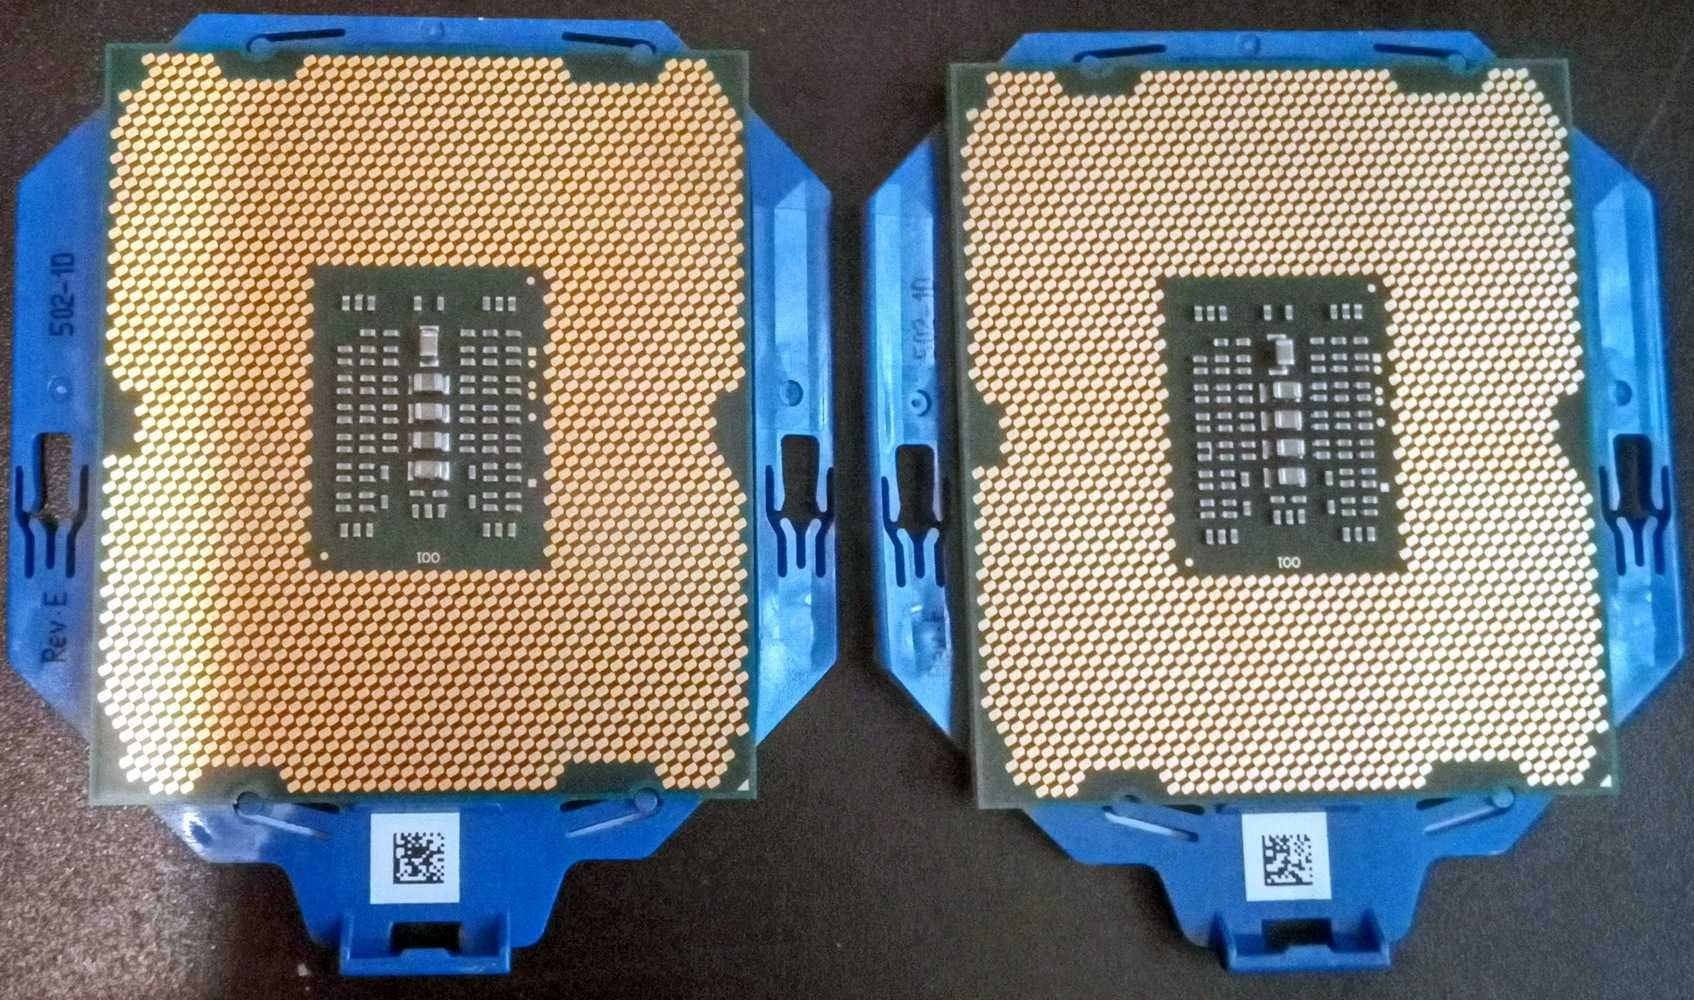 2x CPU Intel Xeon E5-2603 v2 SR1AY + radiator CoolerMaster HP DL380p